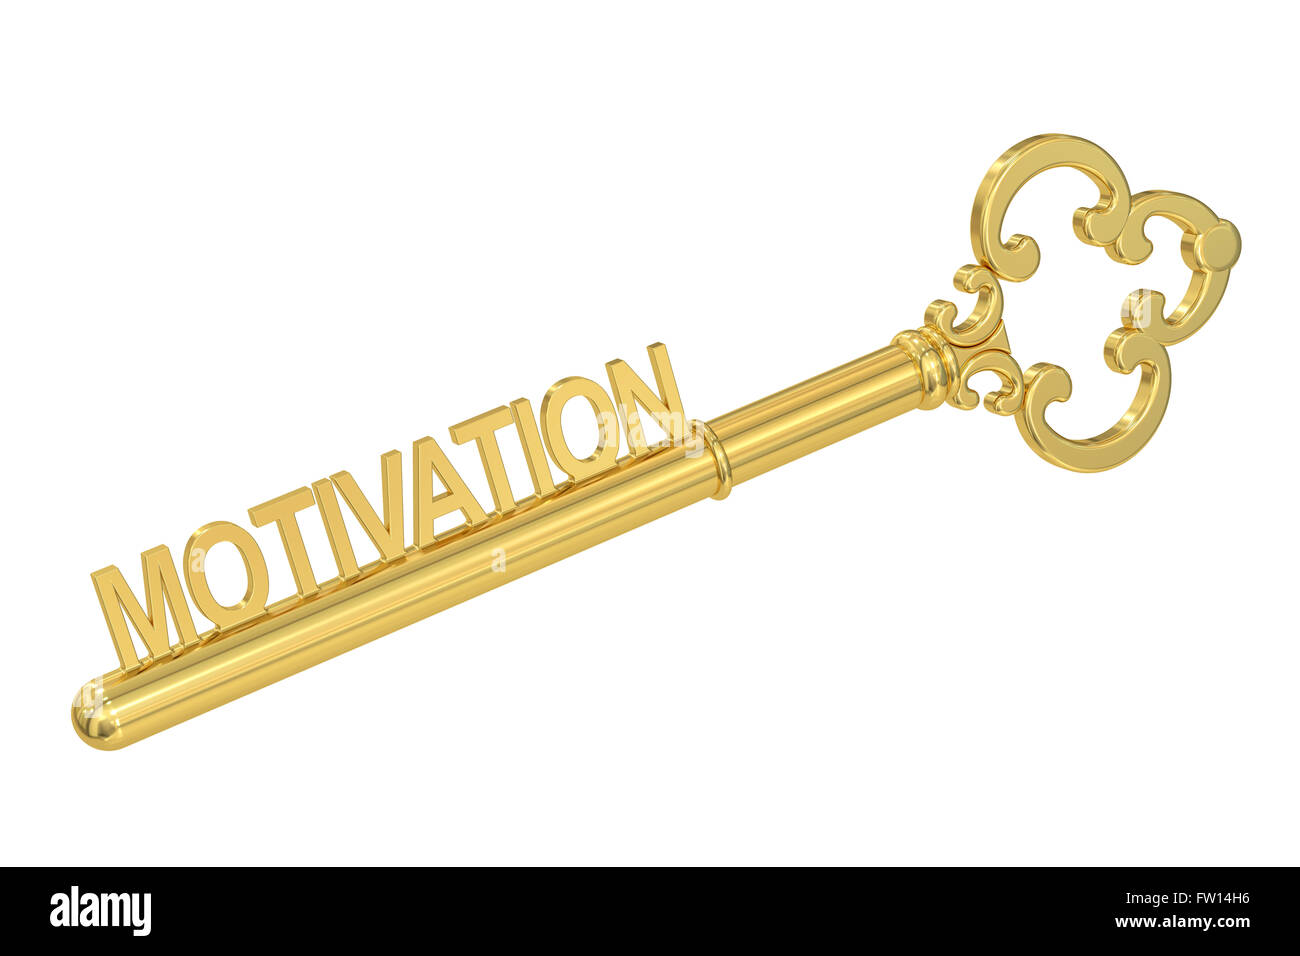 Motivation-Konzept mit goldenen Schlüssel, 3D rendering Stockfoto